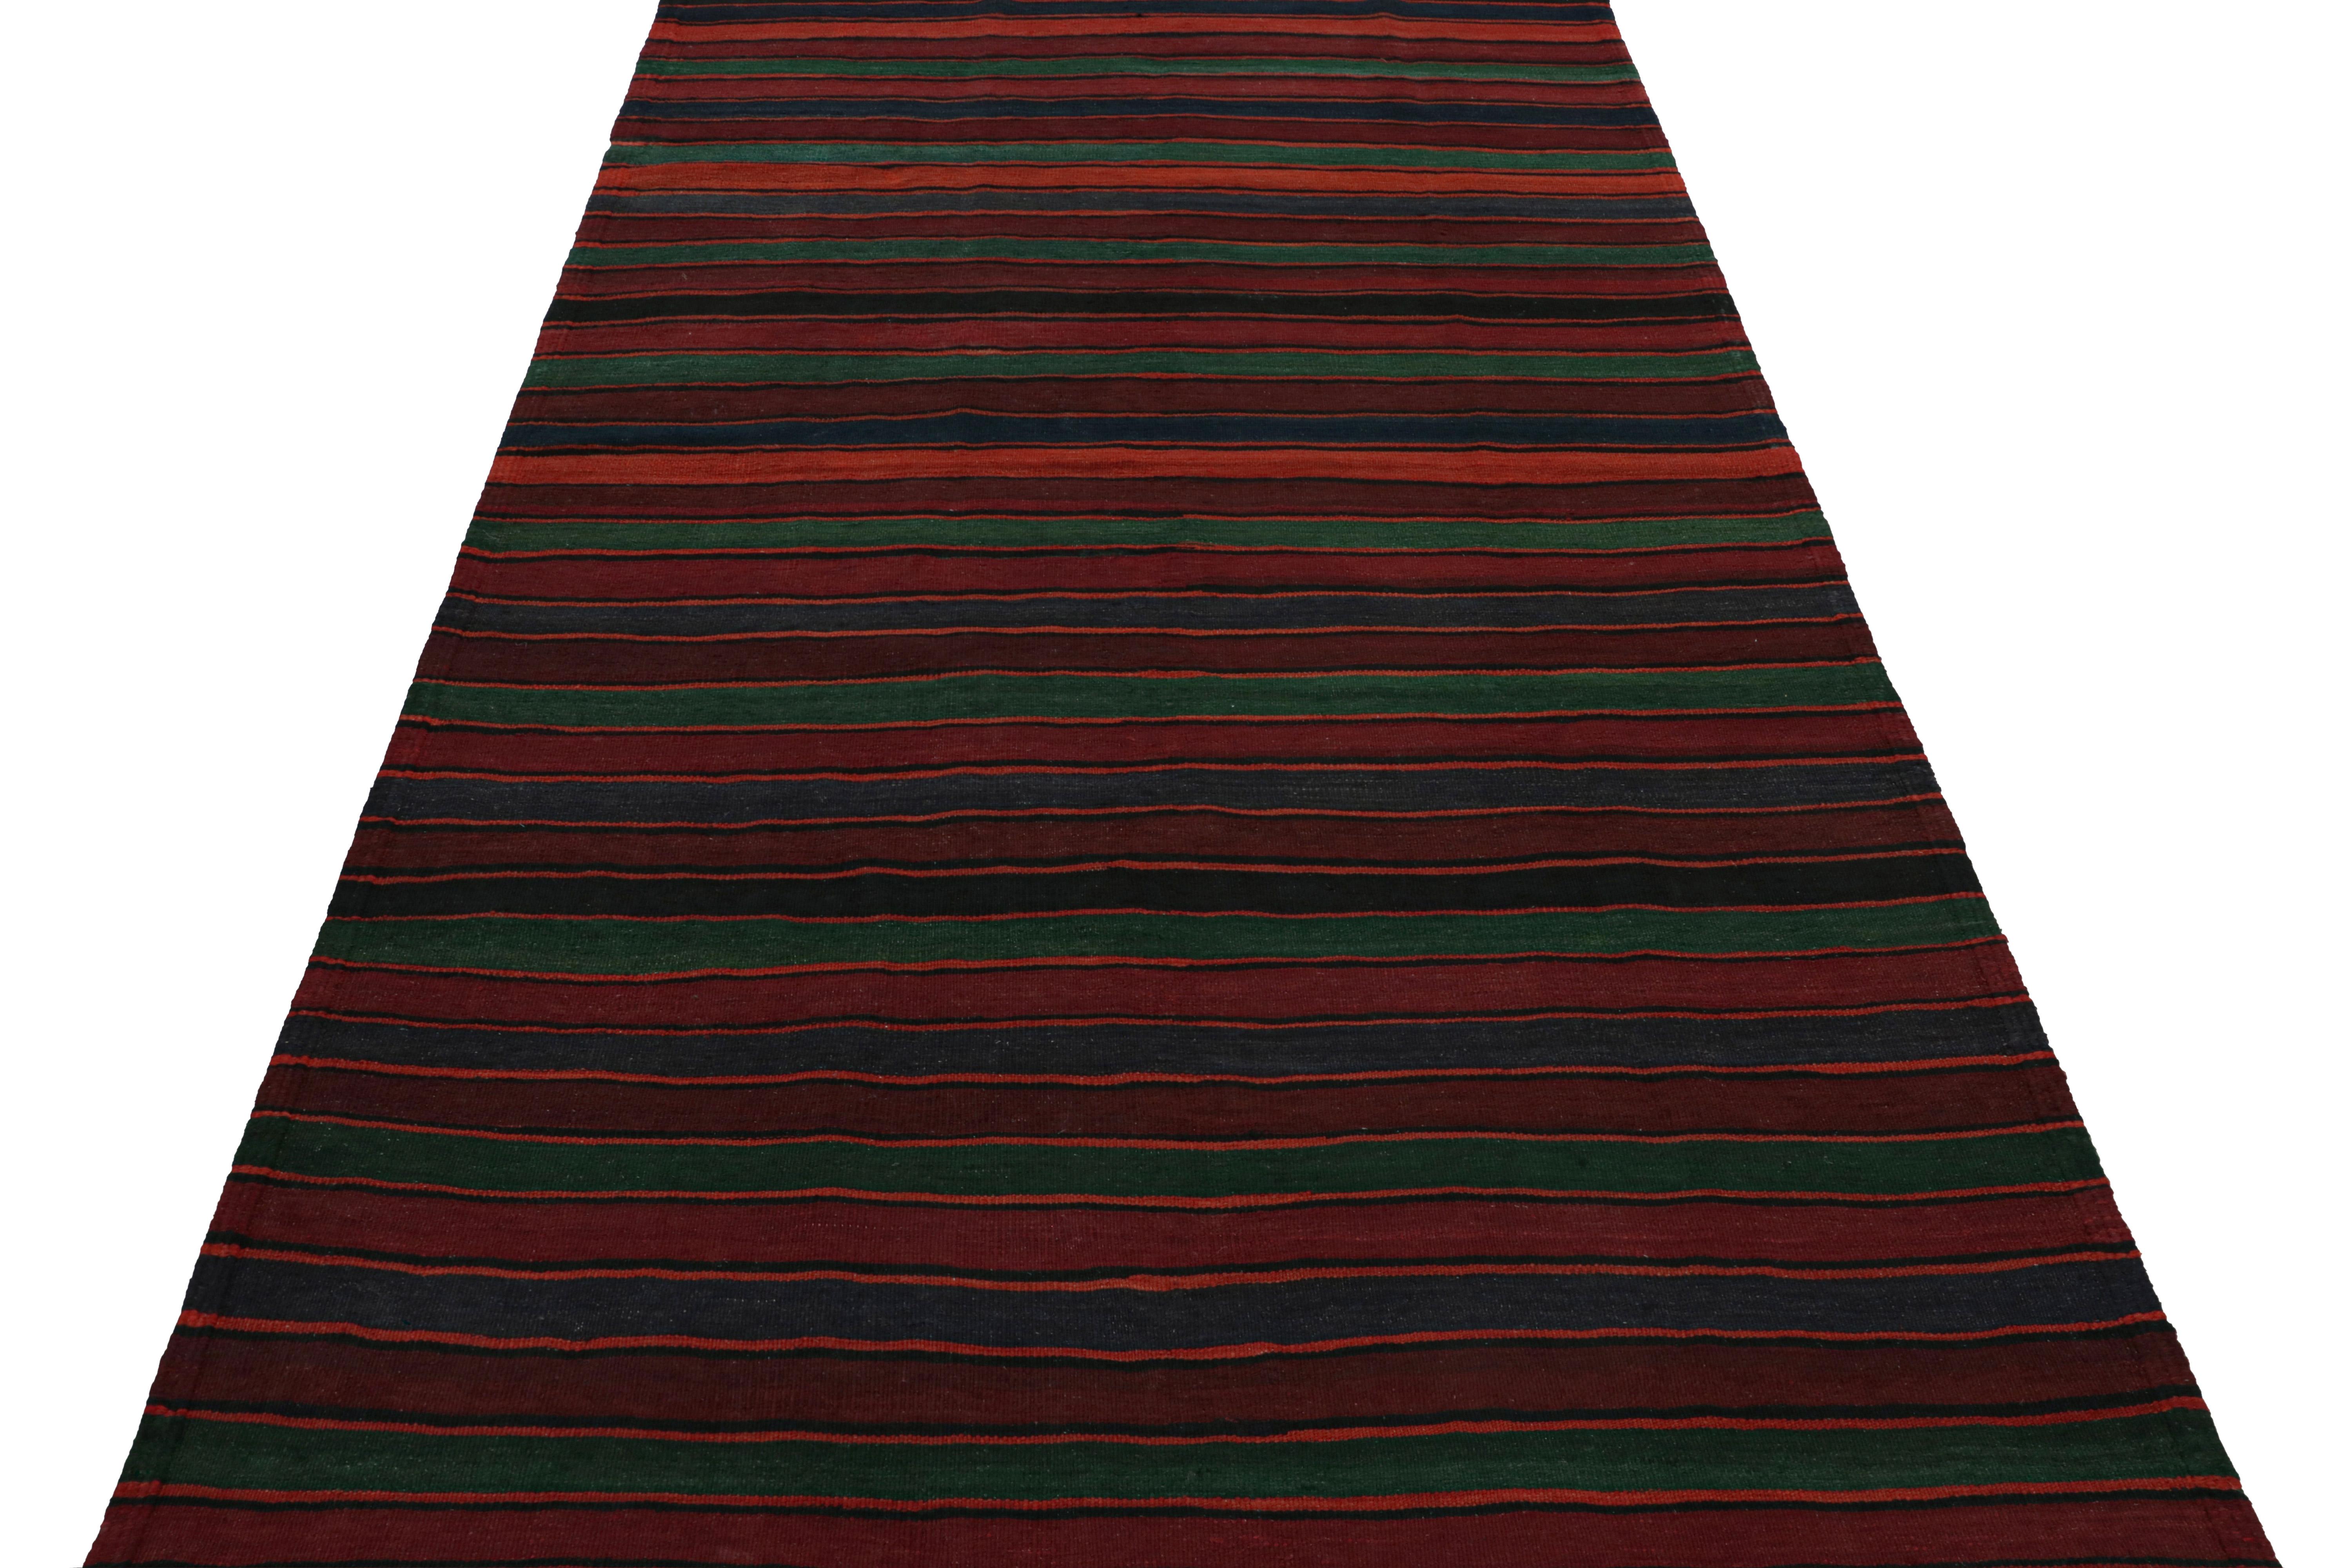 Tribal Vintage Afghani tribal Kilim rug, in Burgundy, from Rug & Kilim For Sale